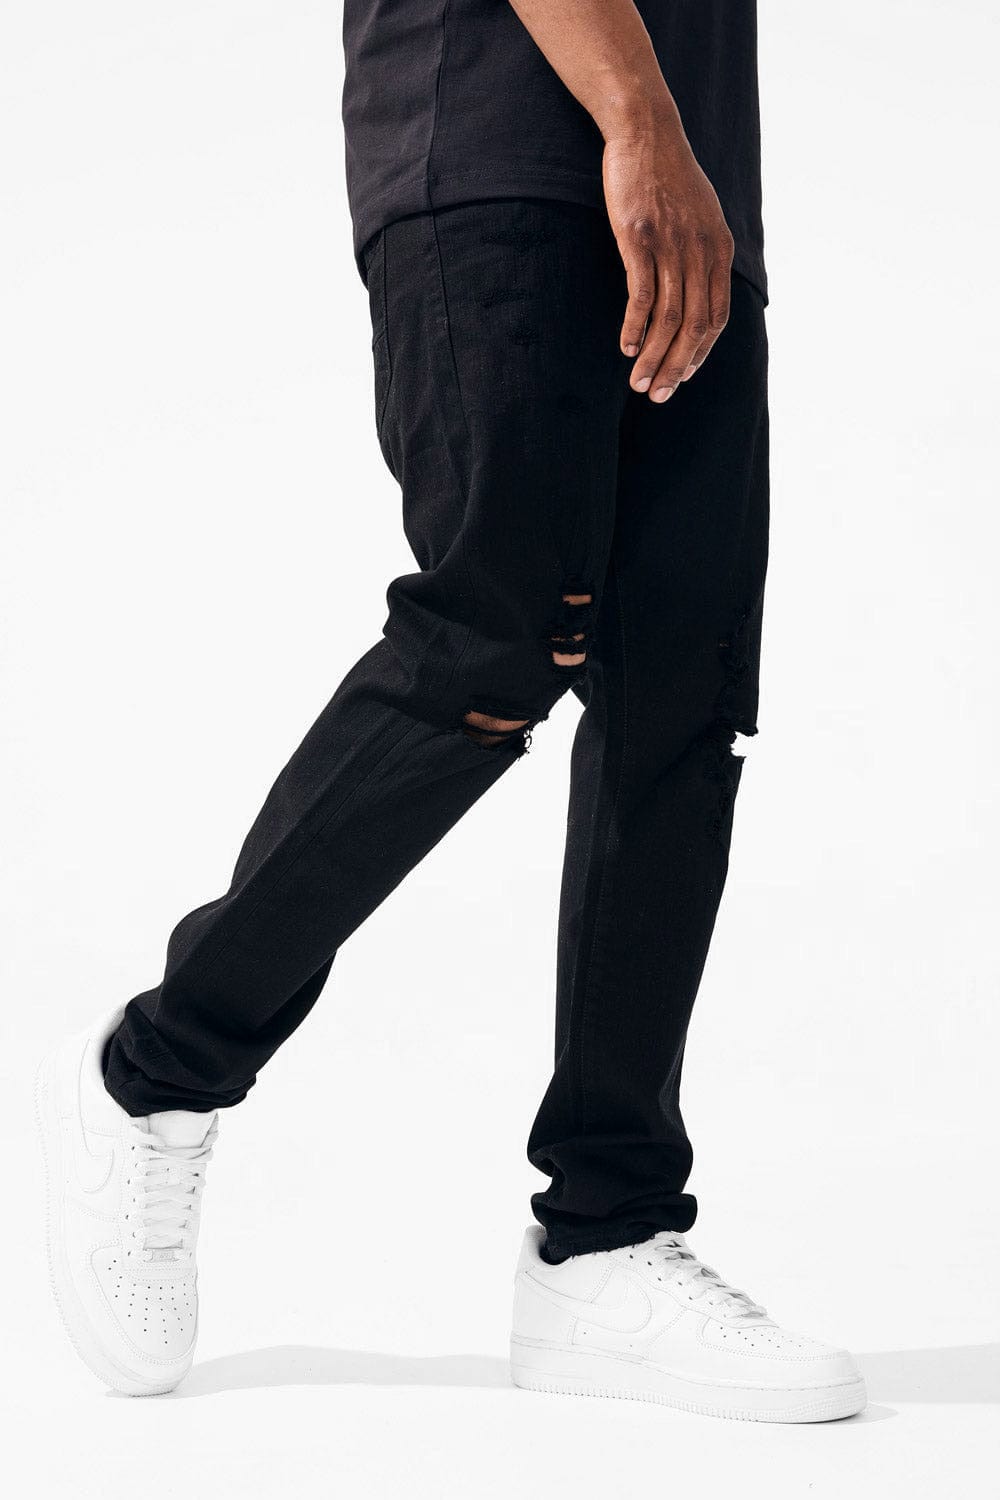 Jordan Craig Ross - Asbury Pants (Black) 28/32 / Black